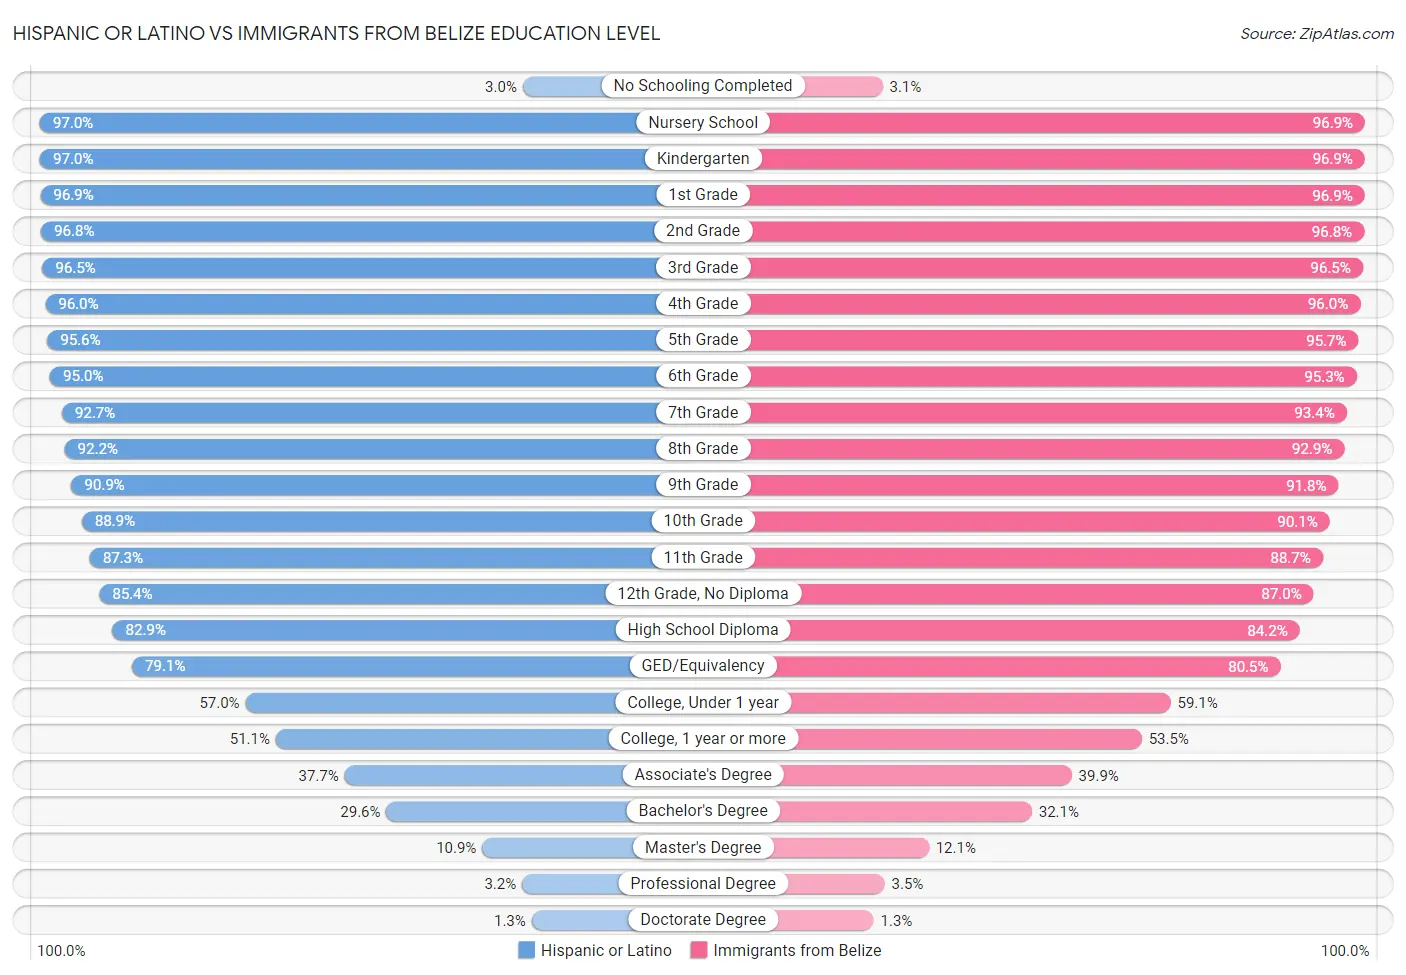 Hispanic or Latino vs Immigrants from Belize Education Level